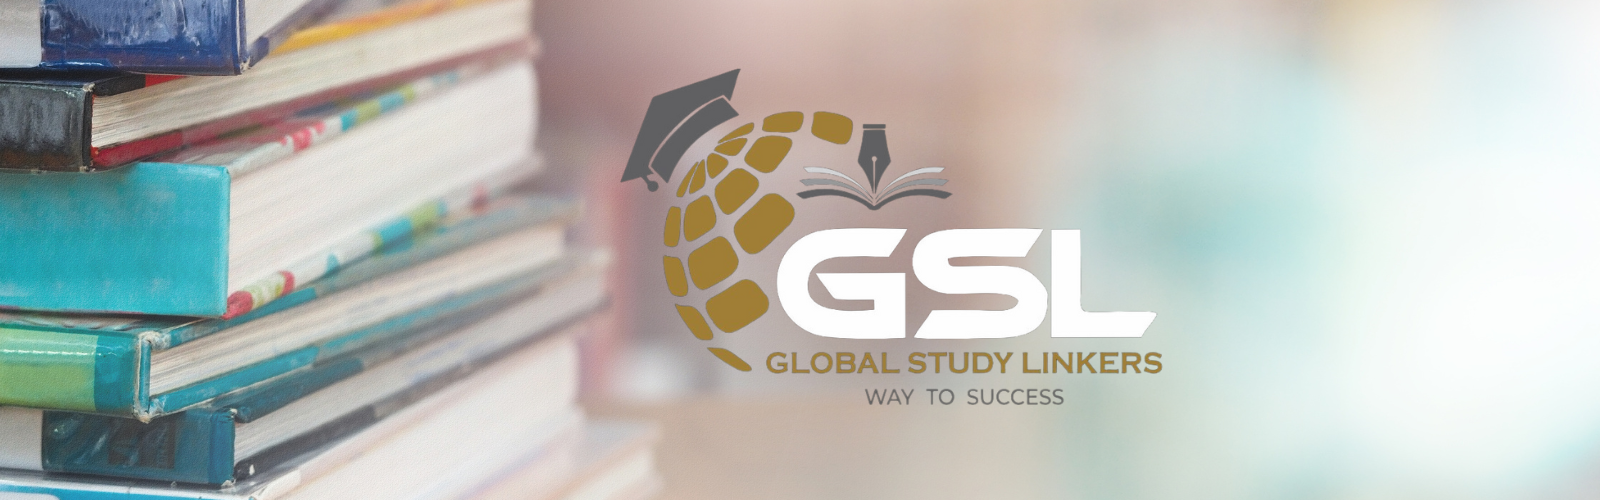 Global Study Linkers